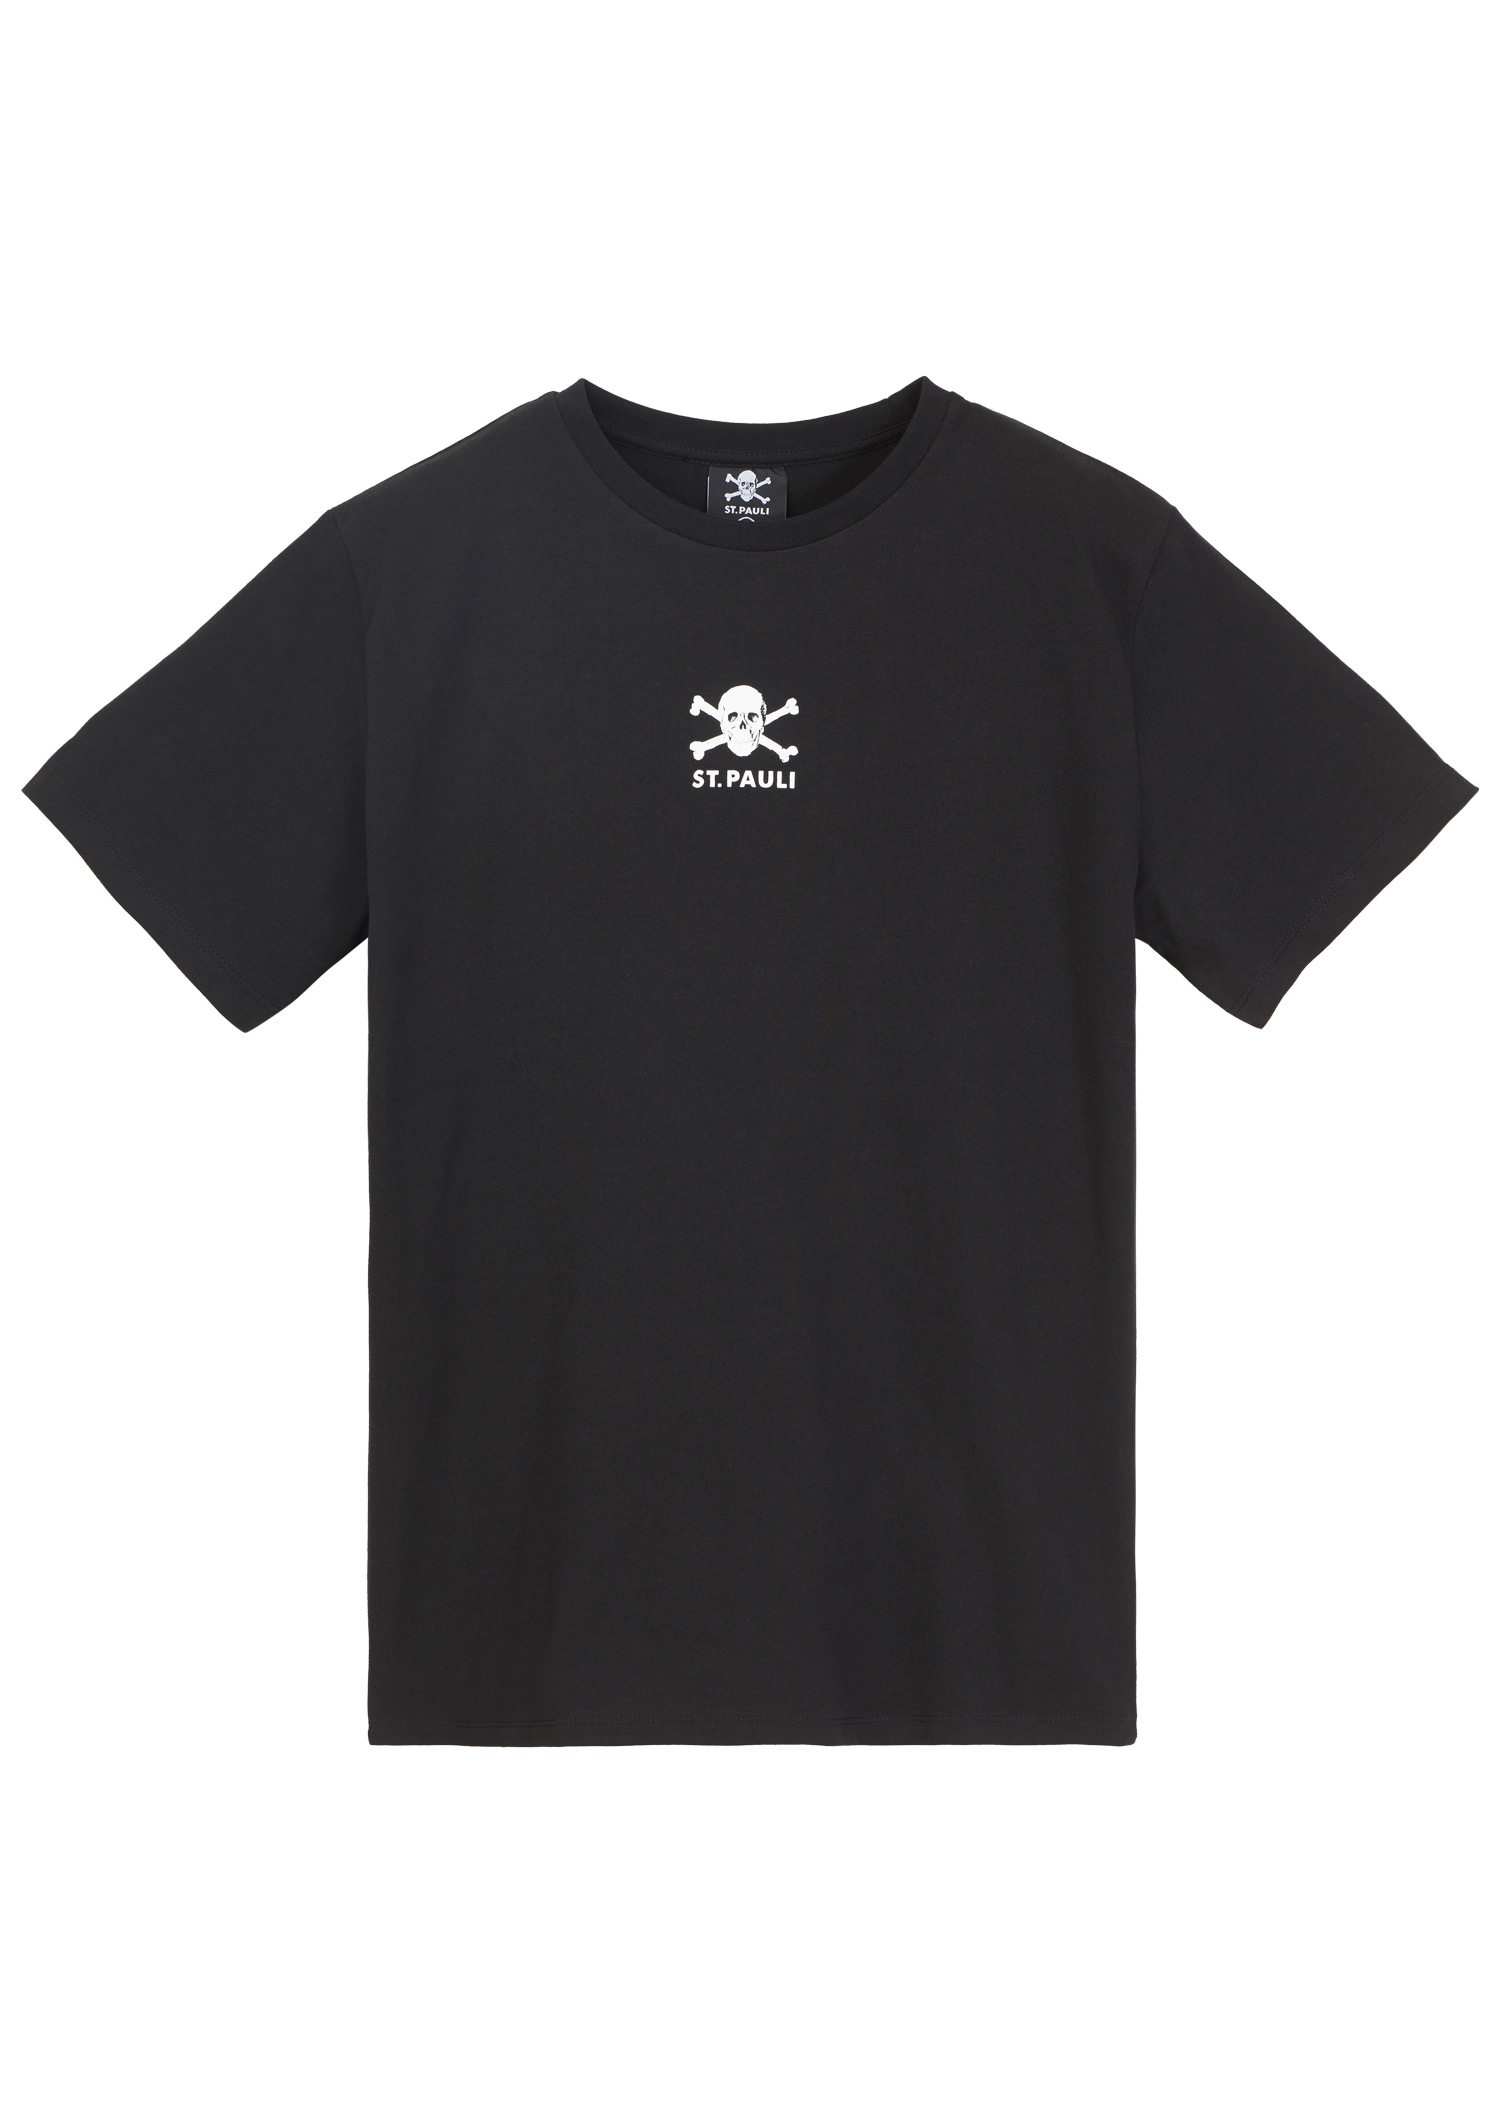 T-Shirt TK klein Basic schwarz